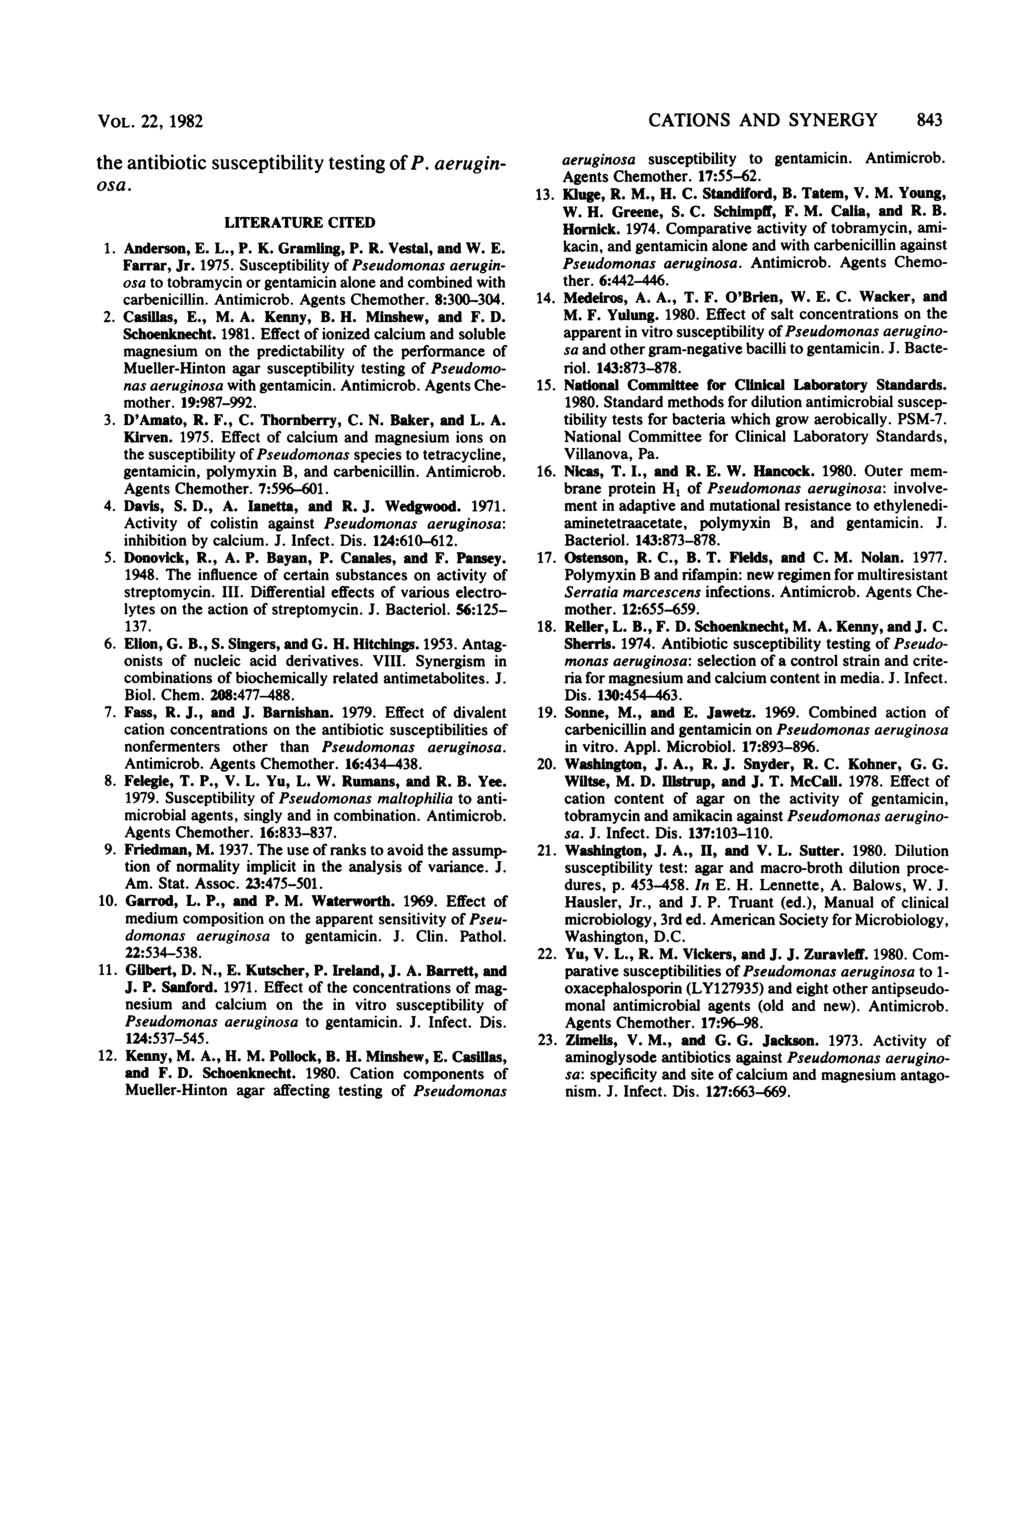 VOL. 22, 1982 the antibiotic susceptibility testing of P. aeruginosa. LITERATURE CITED 1. Anderson, E. L., P. K. Gramling, P. R. Vestal, and W. E. Farrar, Jr. 1975.